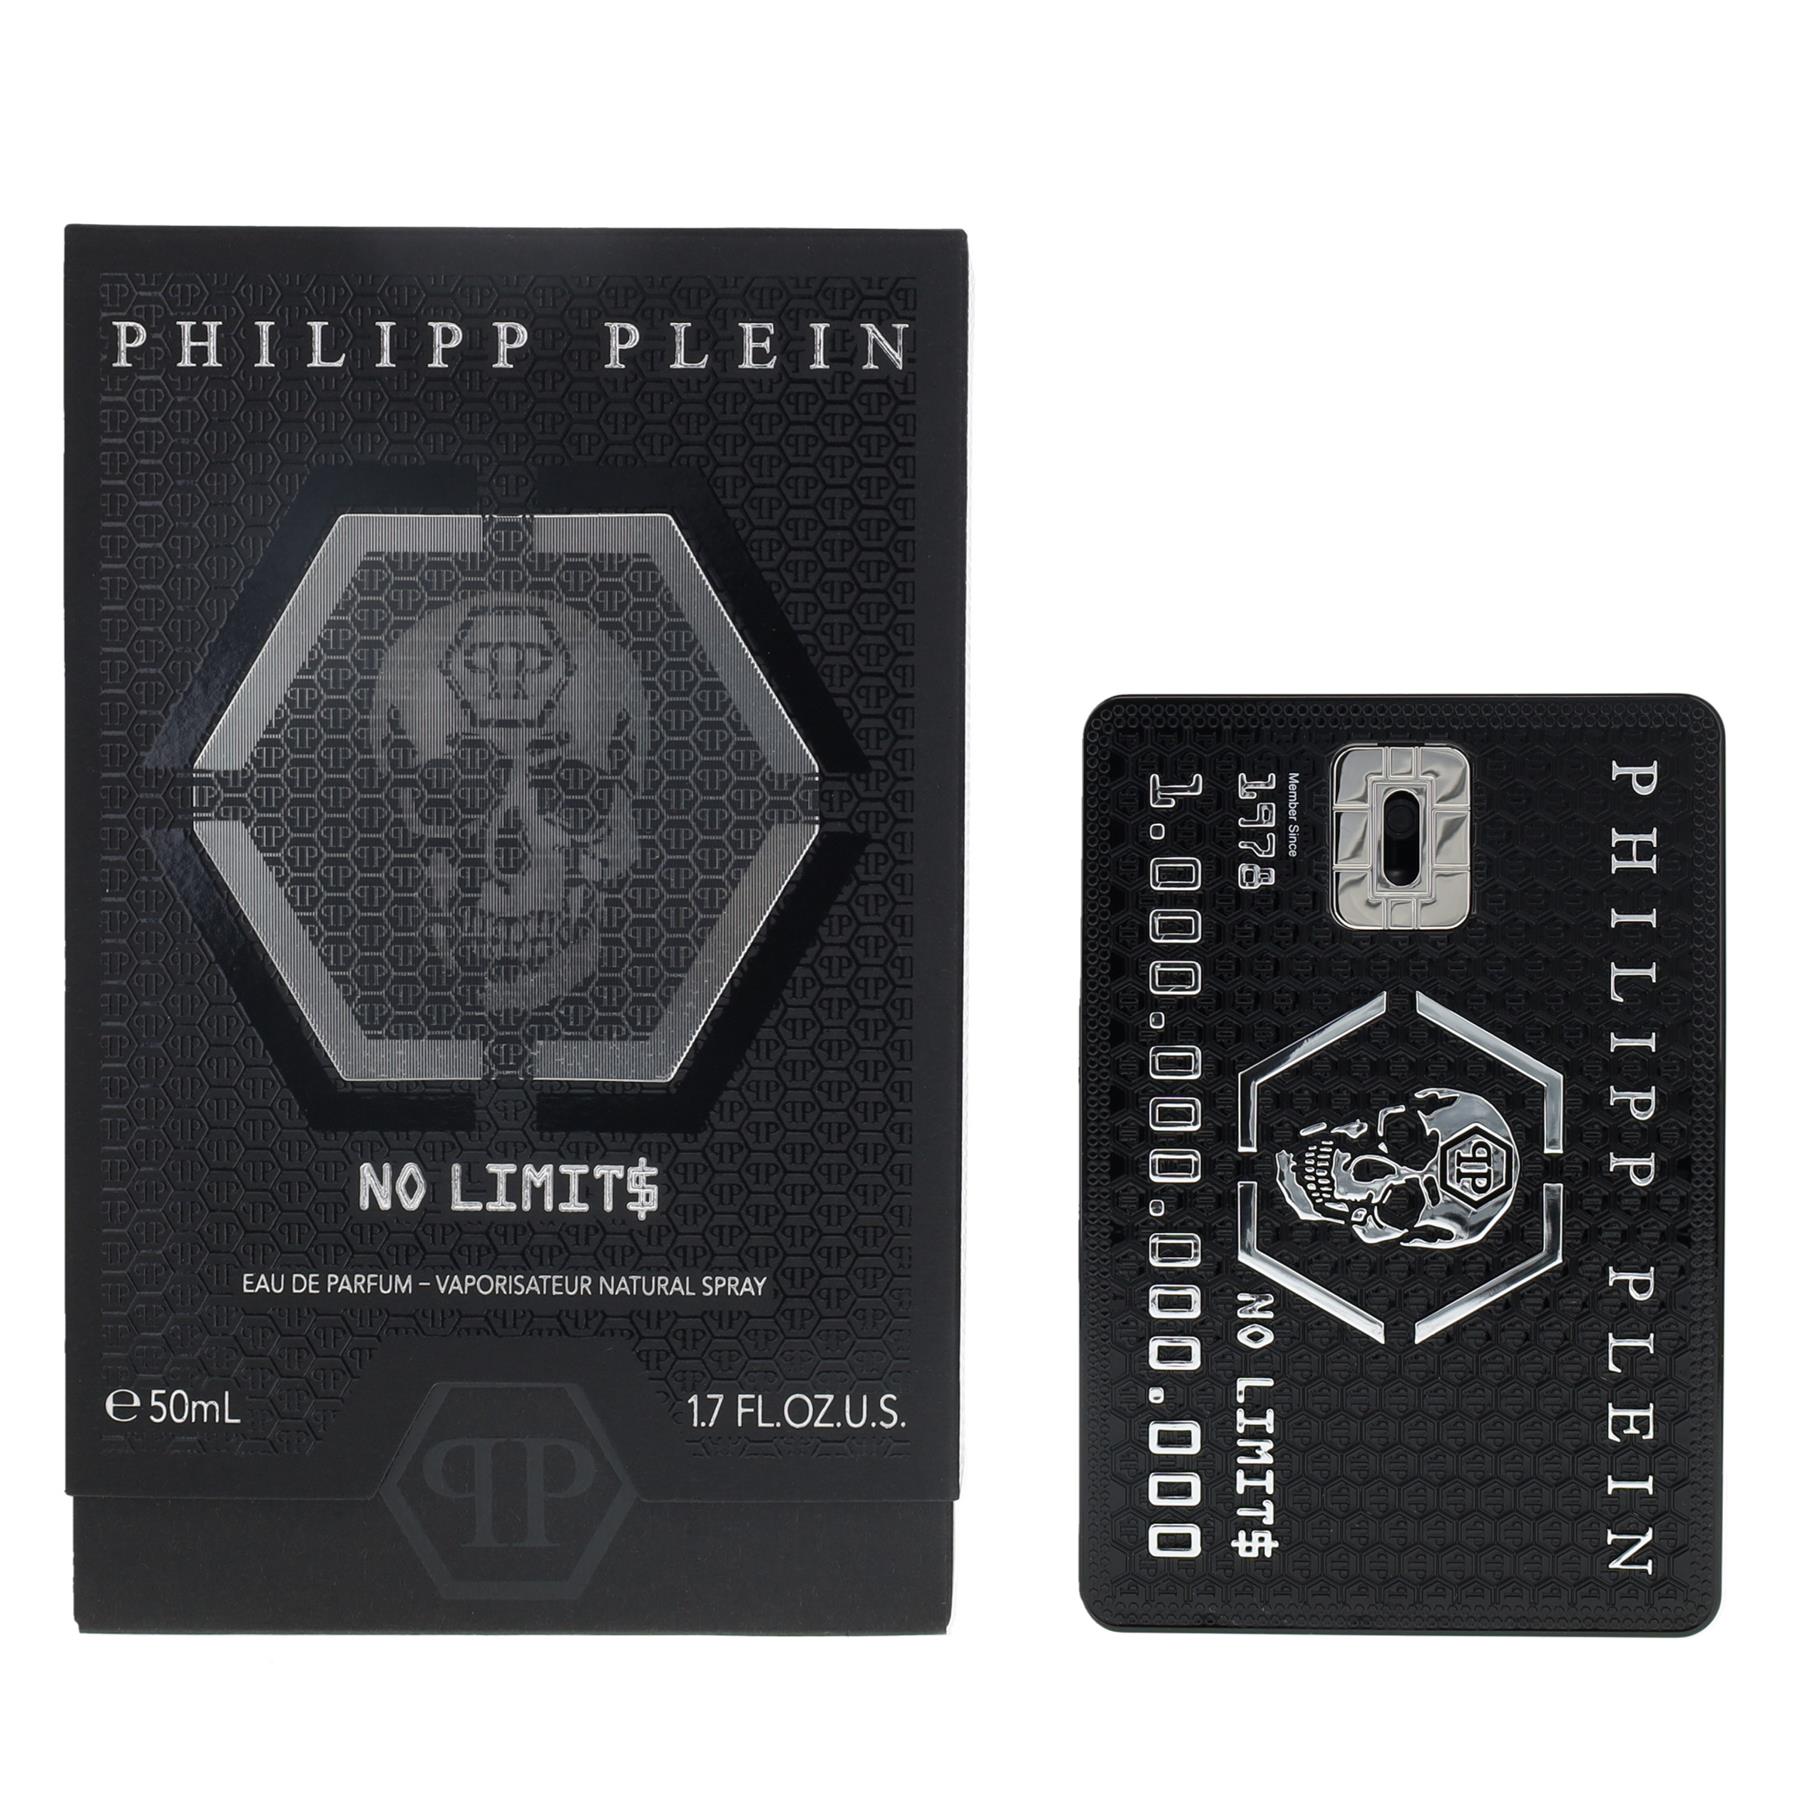 Philipp Plein No Limits 50ml Eau de Parfum Spray for Him from Perfume Plus Direct